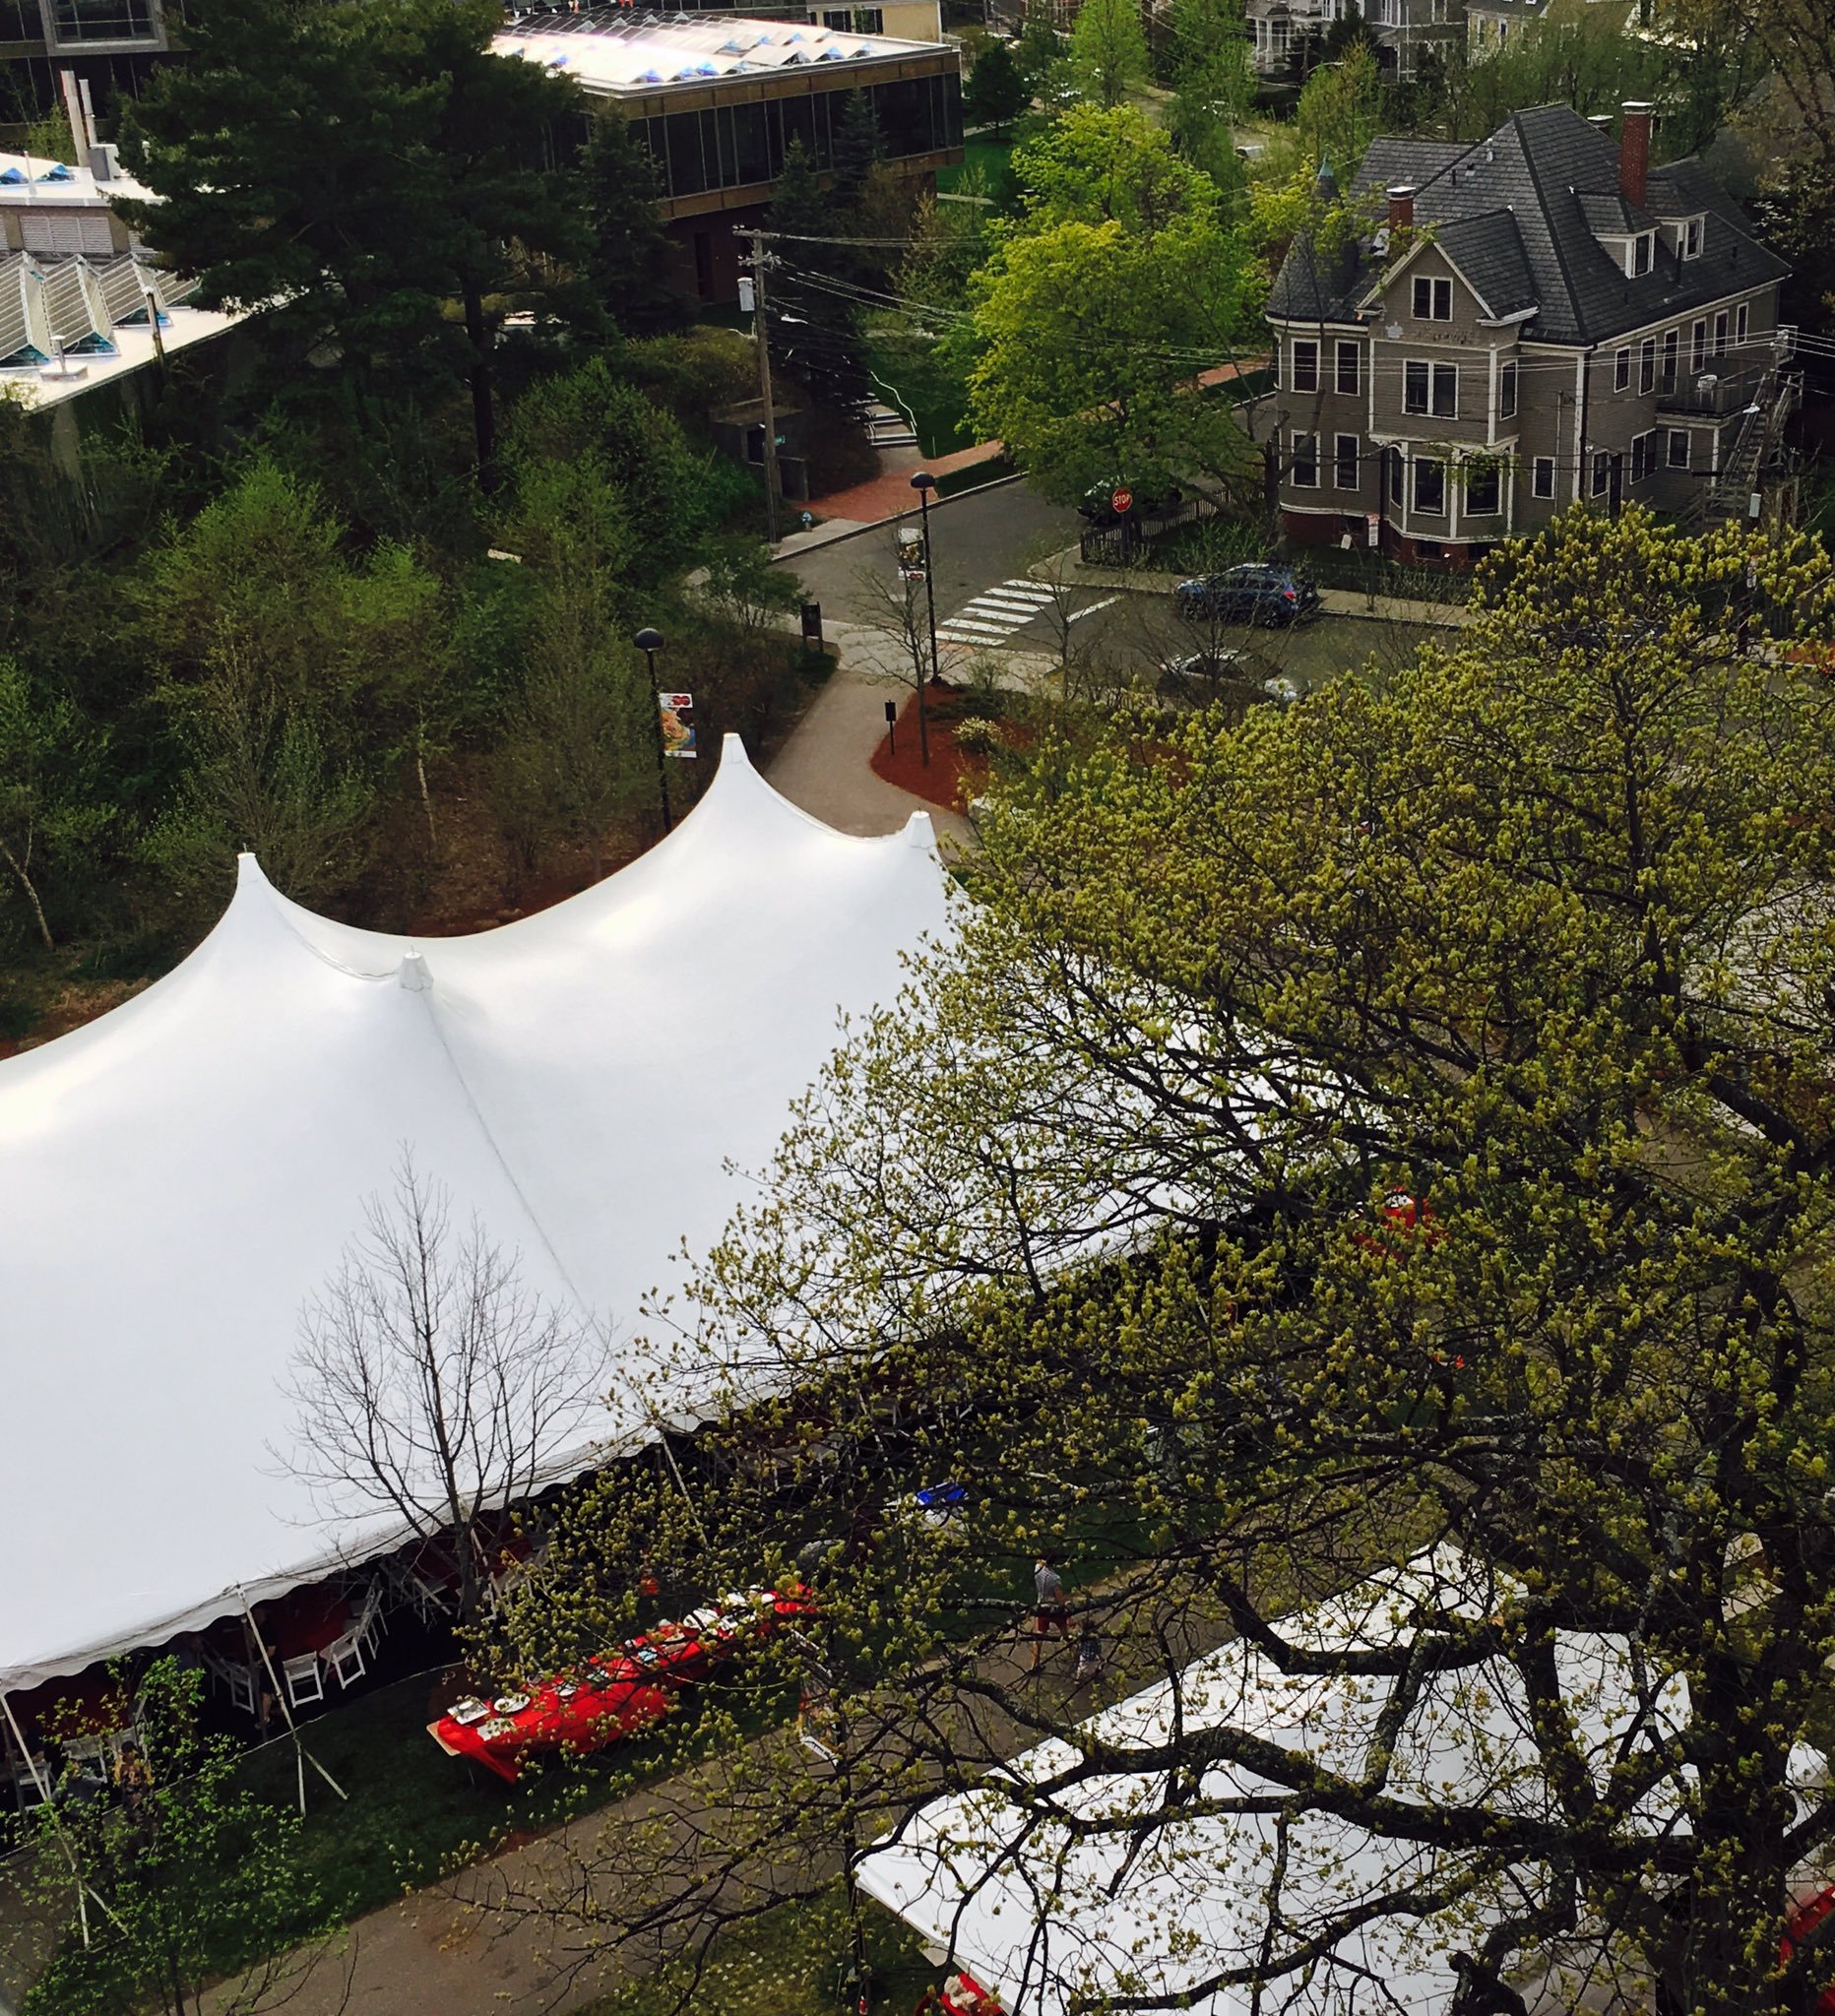 Big tent for a big bicentennial party!! 🎉 #HDS200 https://t.co/mbRGzQp3eV